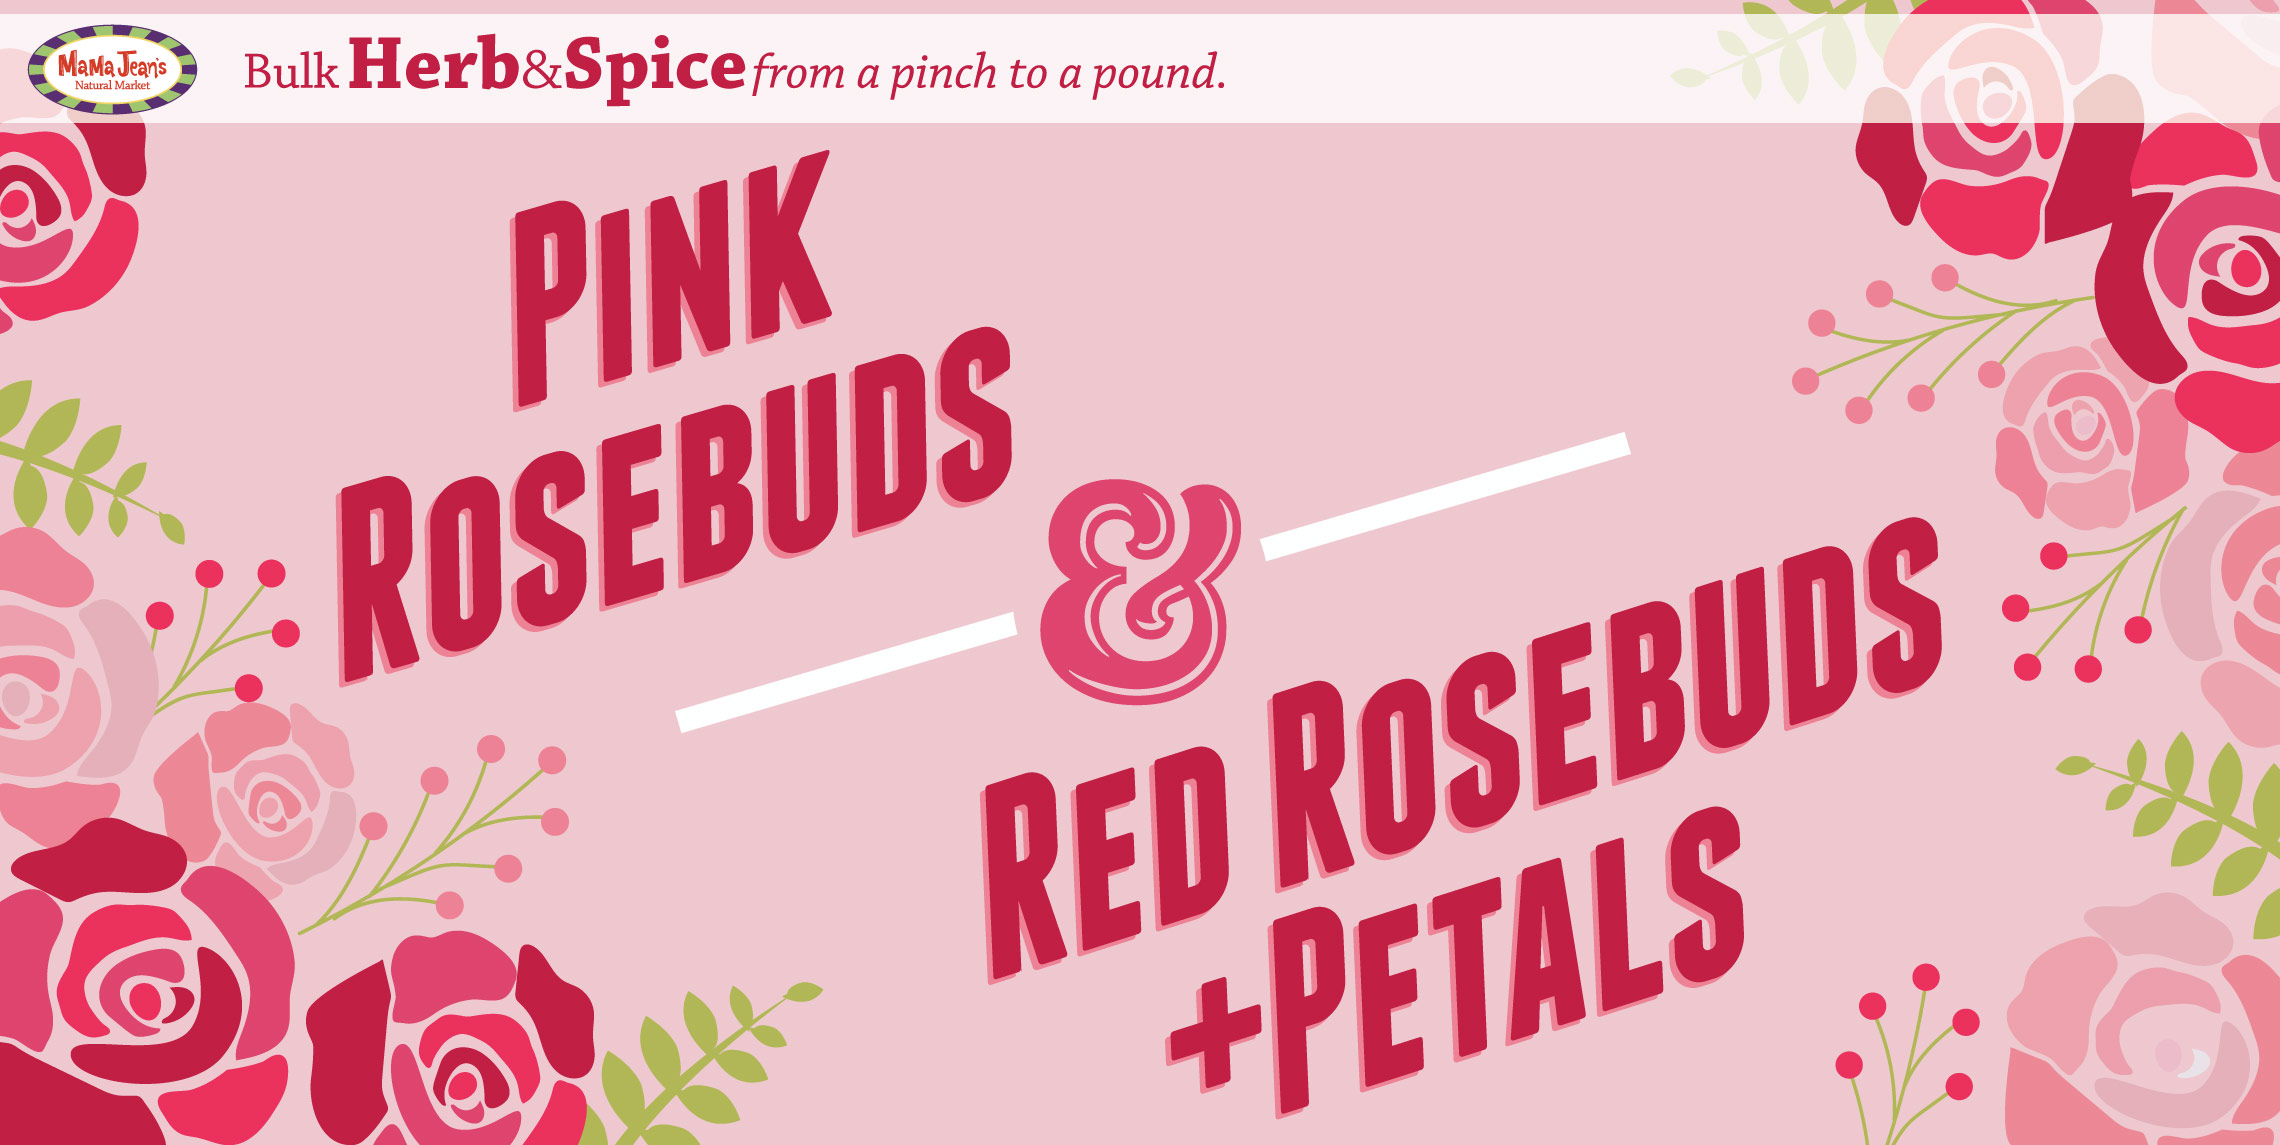 Pink Rosebuds & Red Rosebuds + Petals